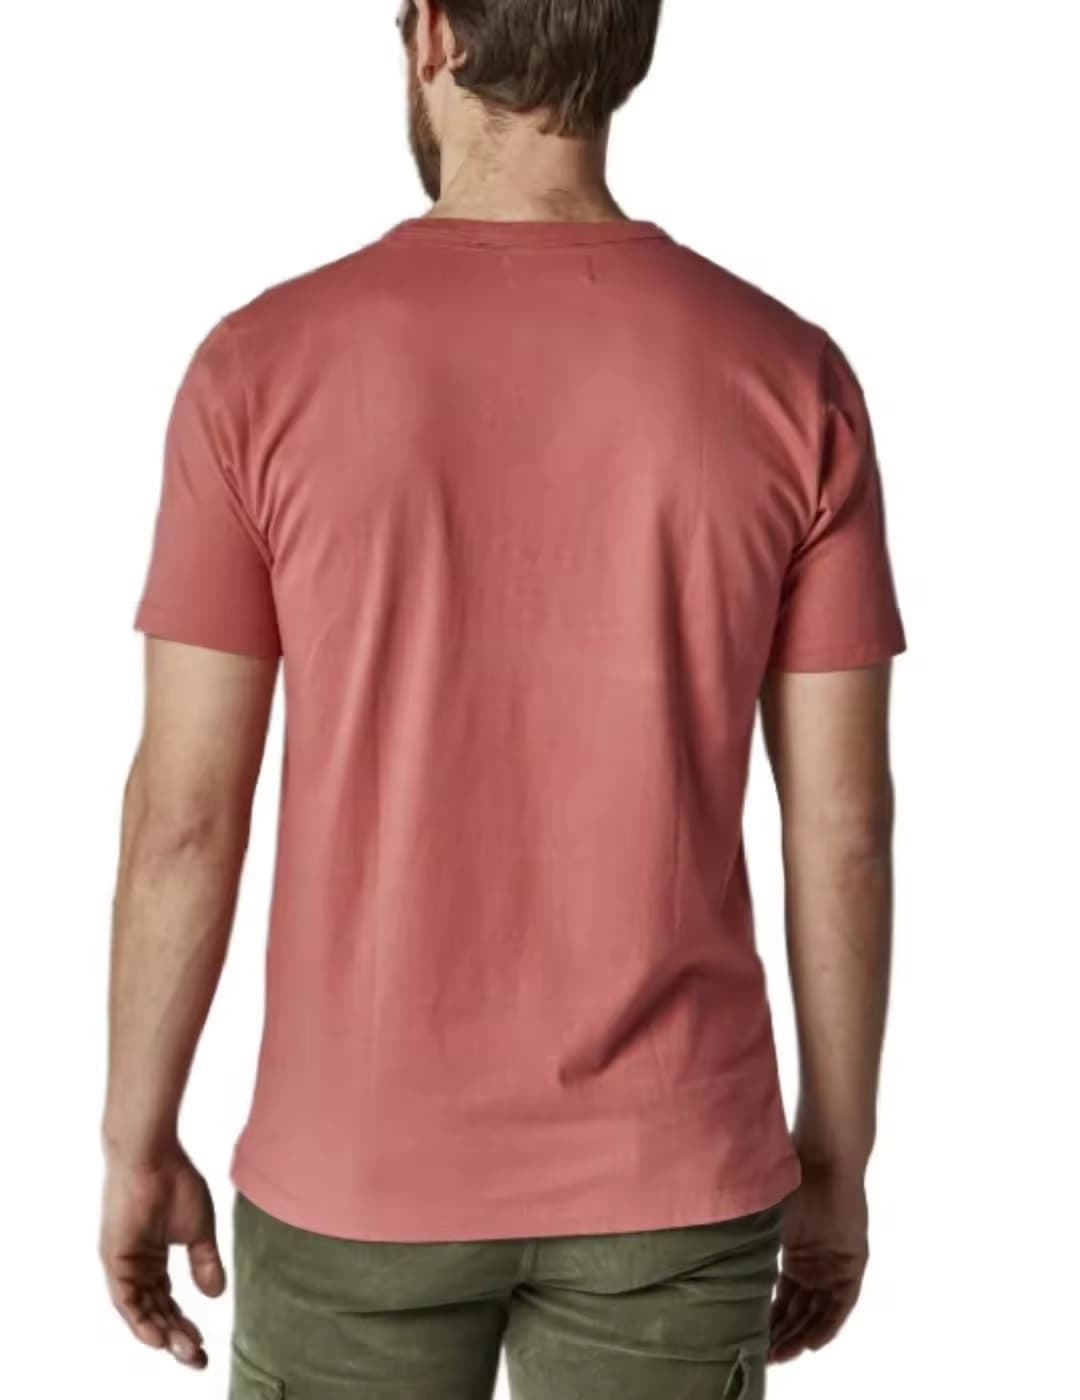 Camiseta Altonadock 104959 naranja - Imagen 3